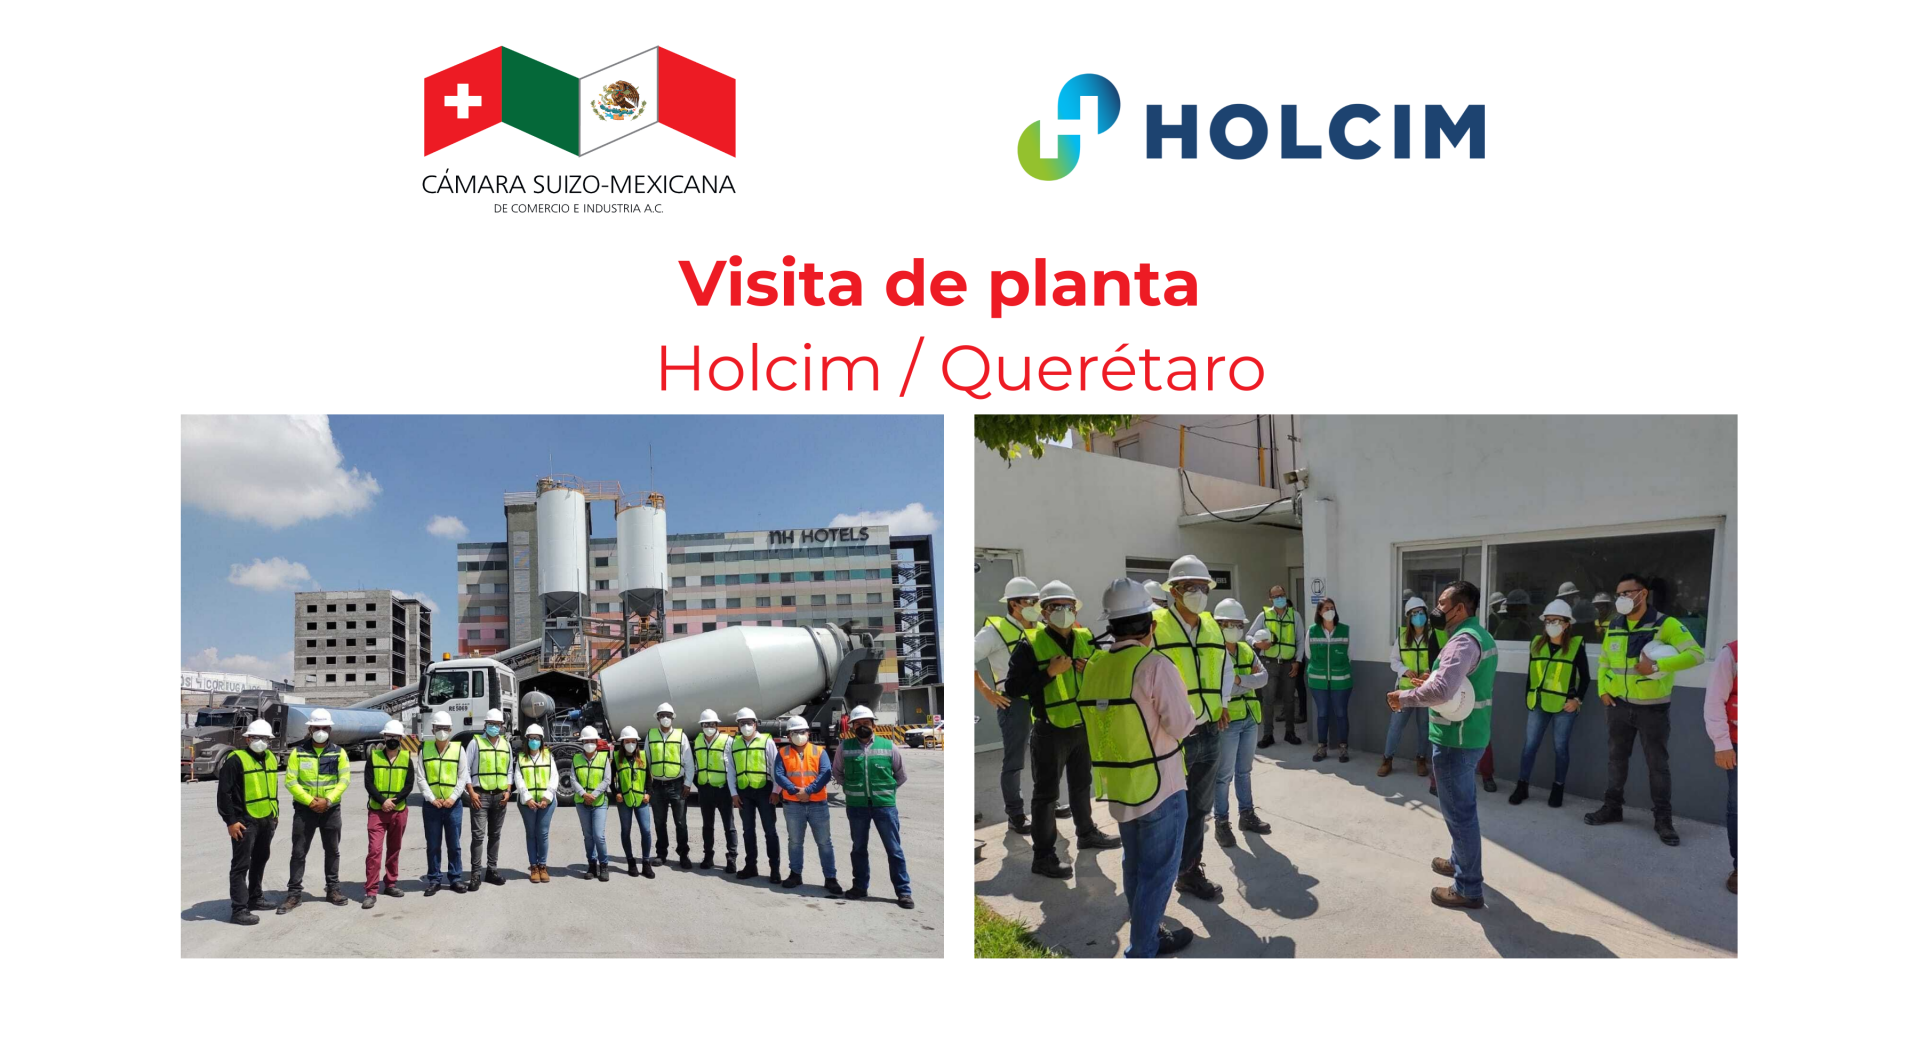 Visit of Holcim plant in Querétaro